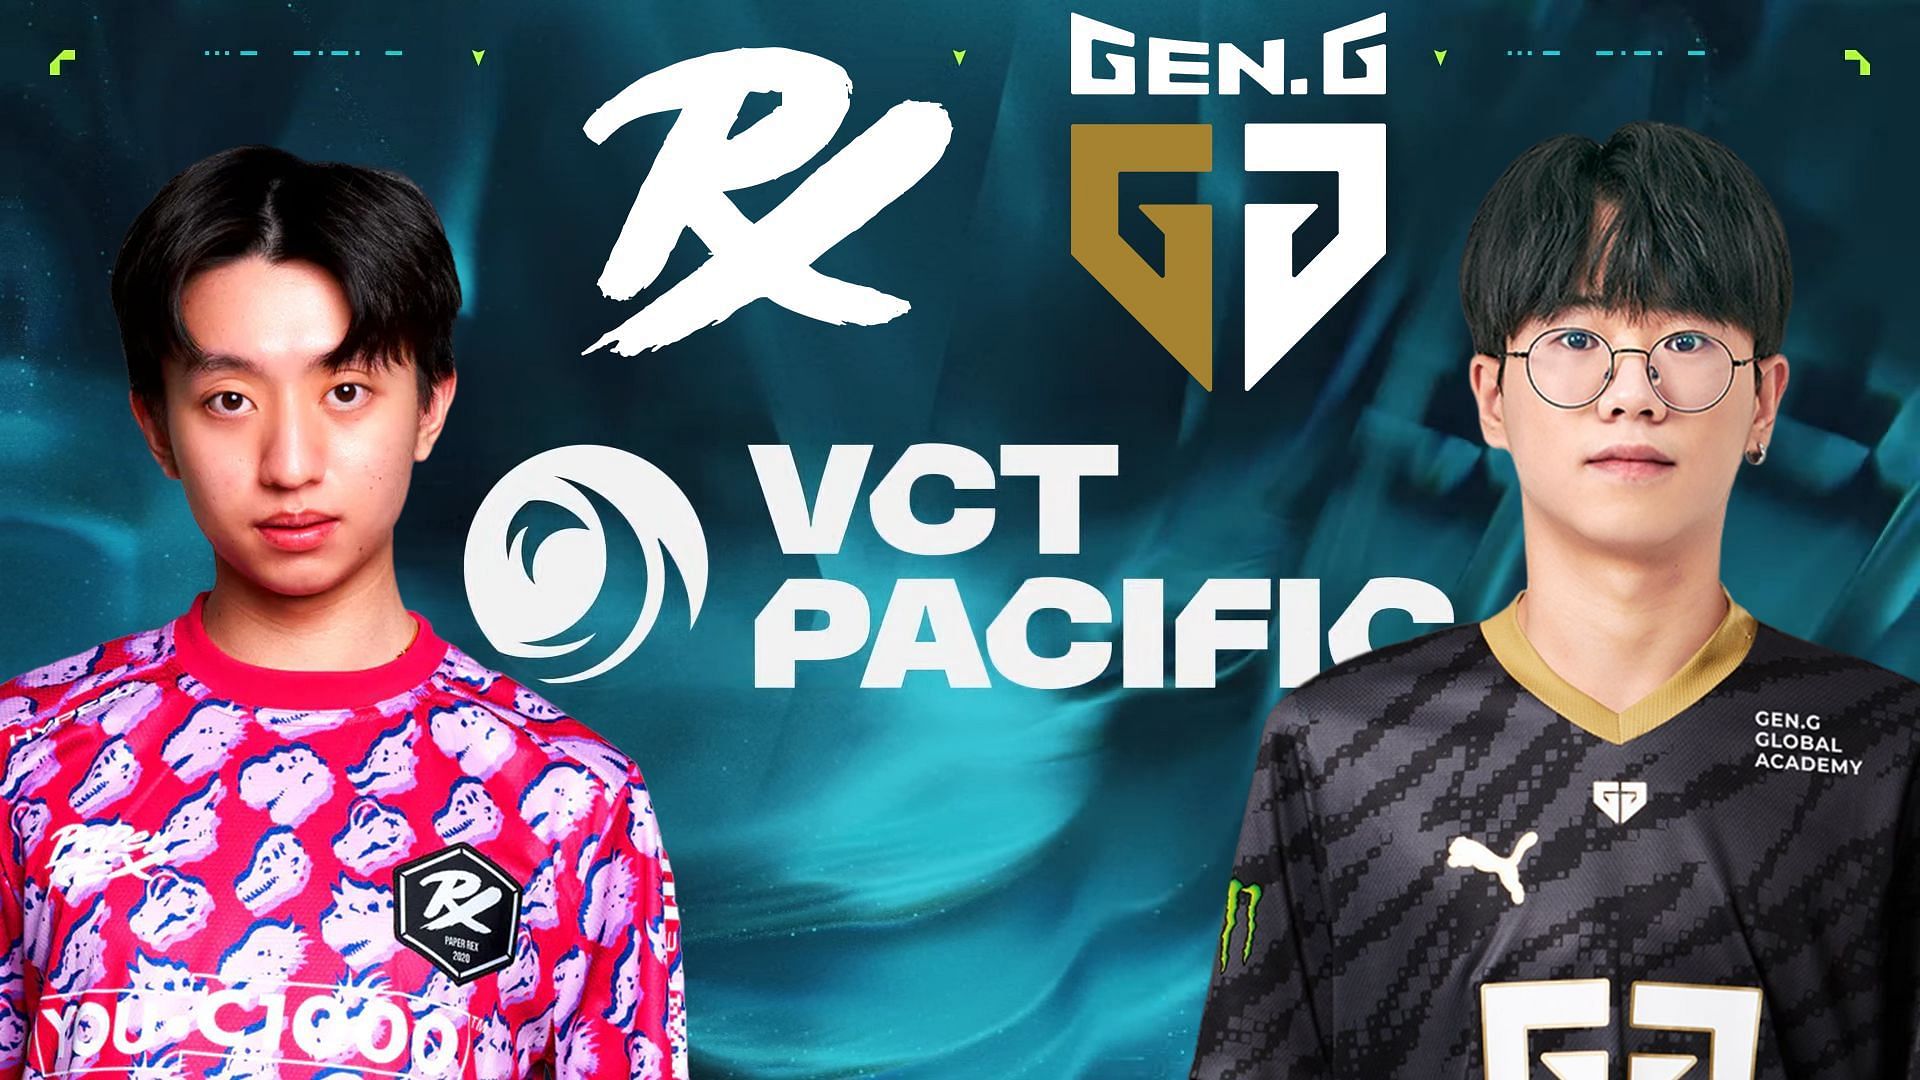 Paper Rex vs Gen.G at VCT Pacific Kickoff (Image via Riot Games, Paper Rex and Gen.G)